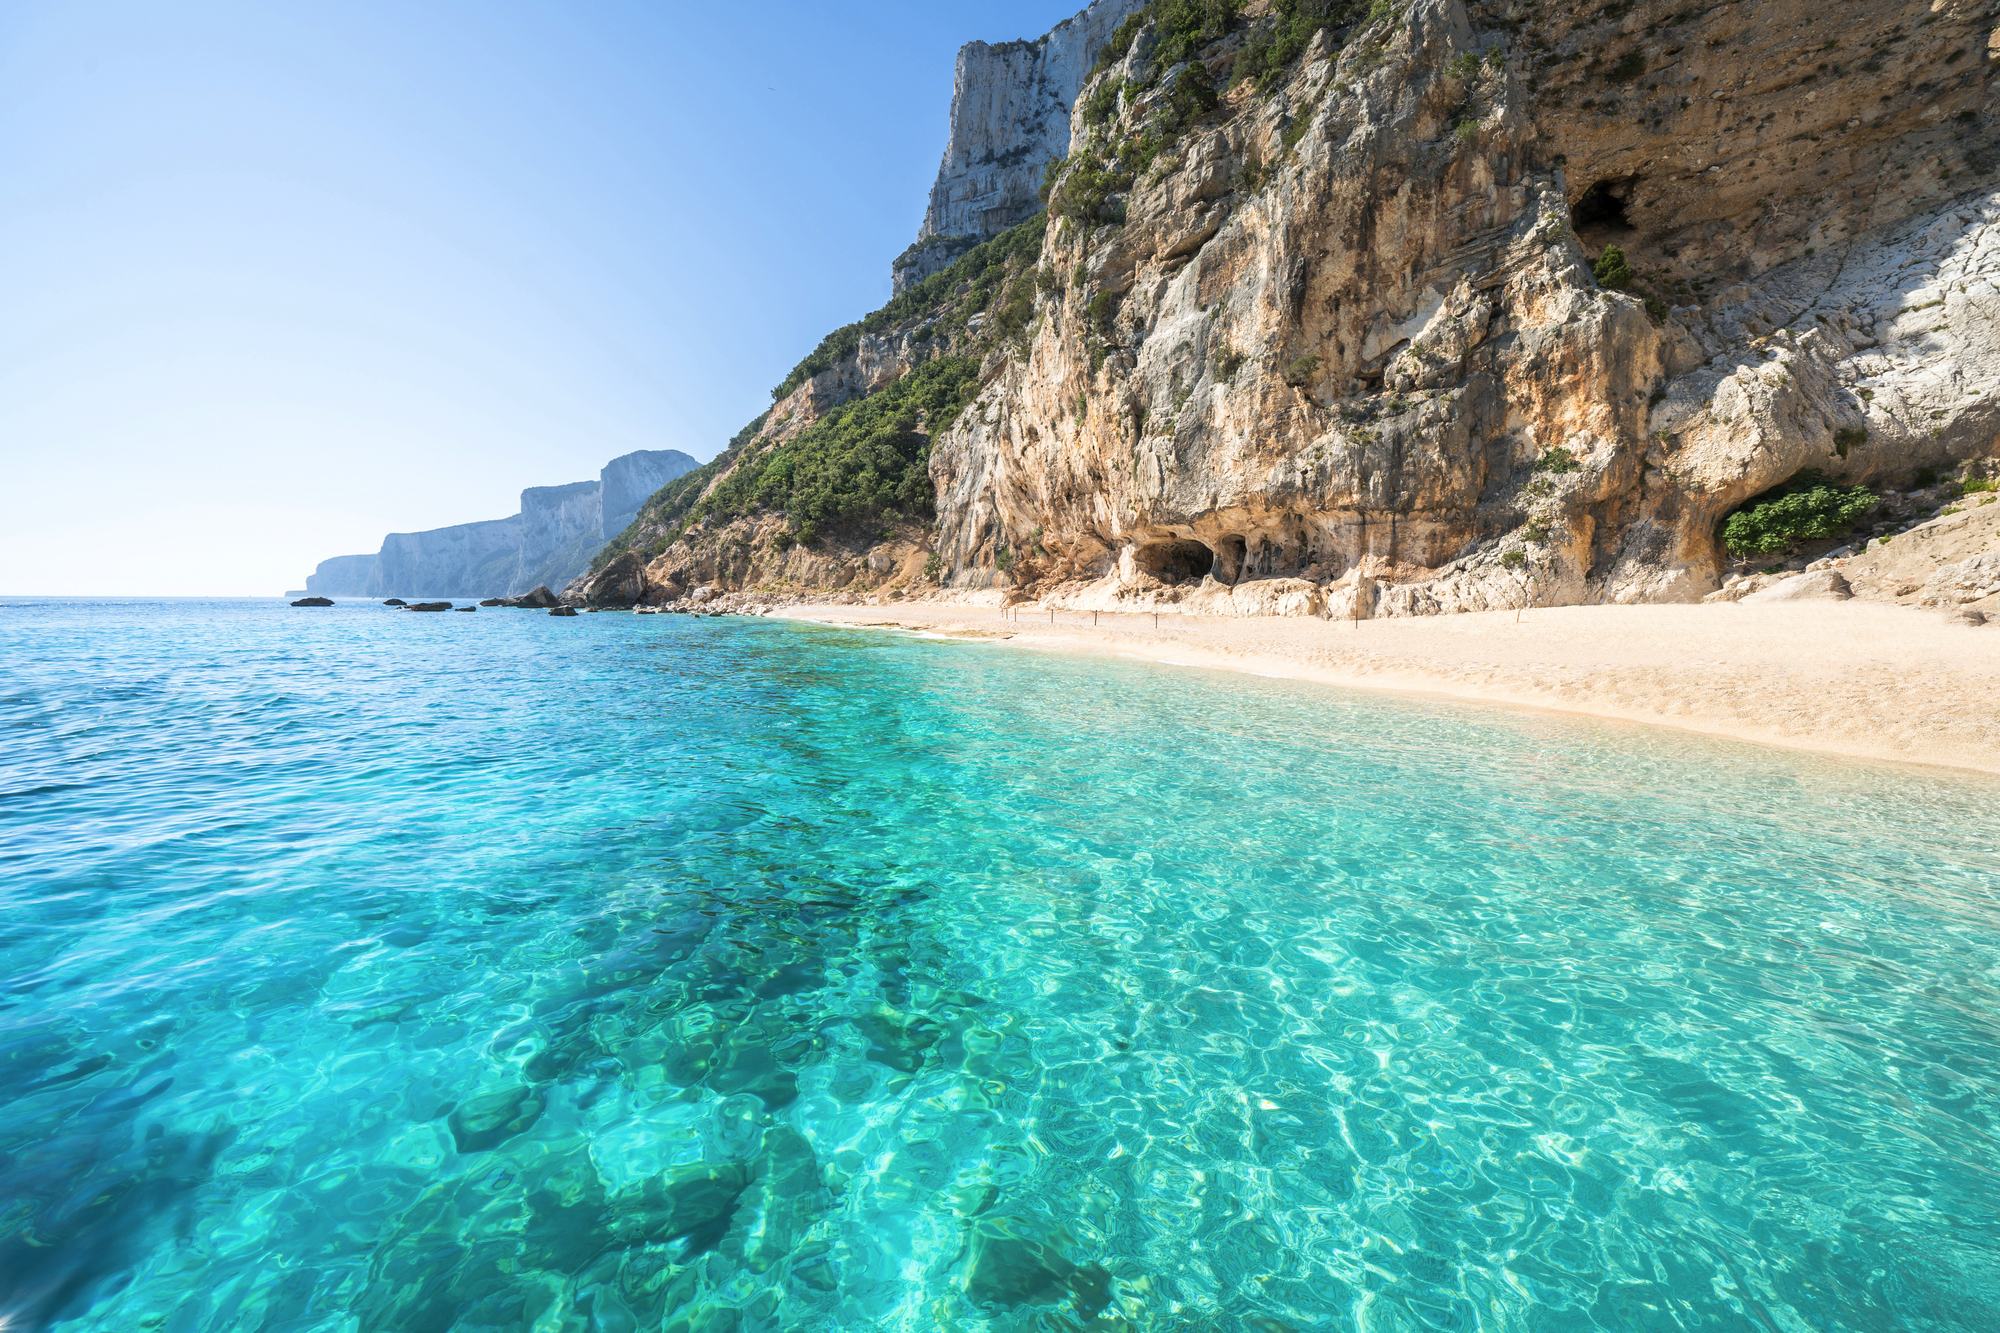 Famous Cala Gabbiani beach at Gulf of Orosei in Sardinia, Italy